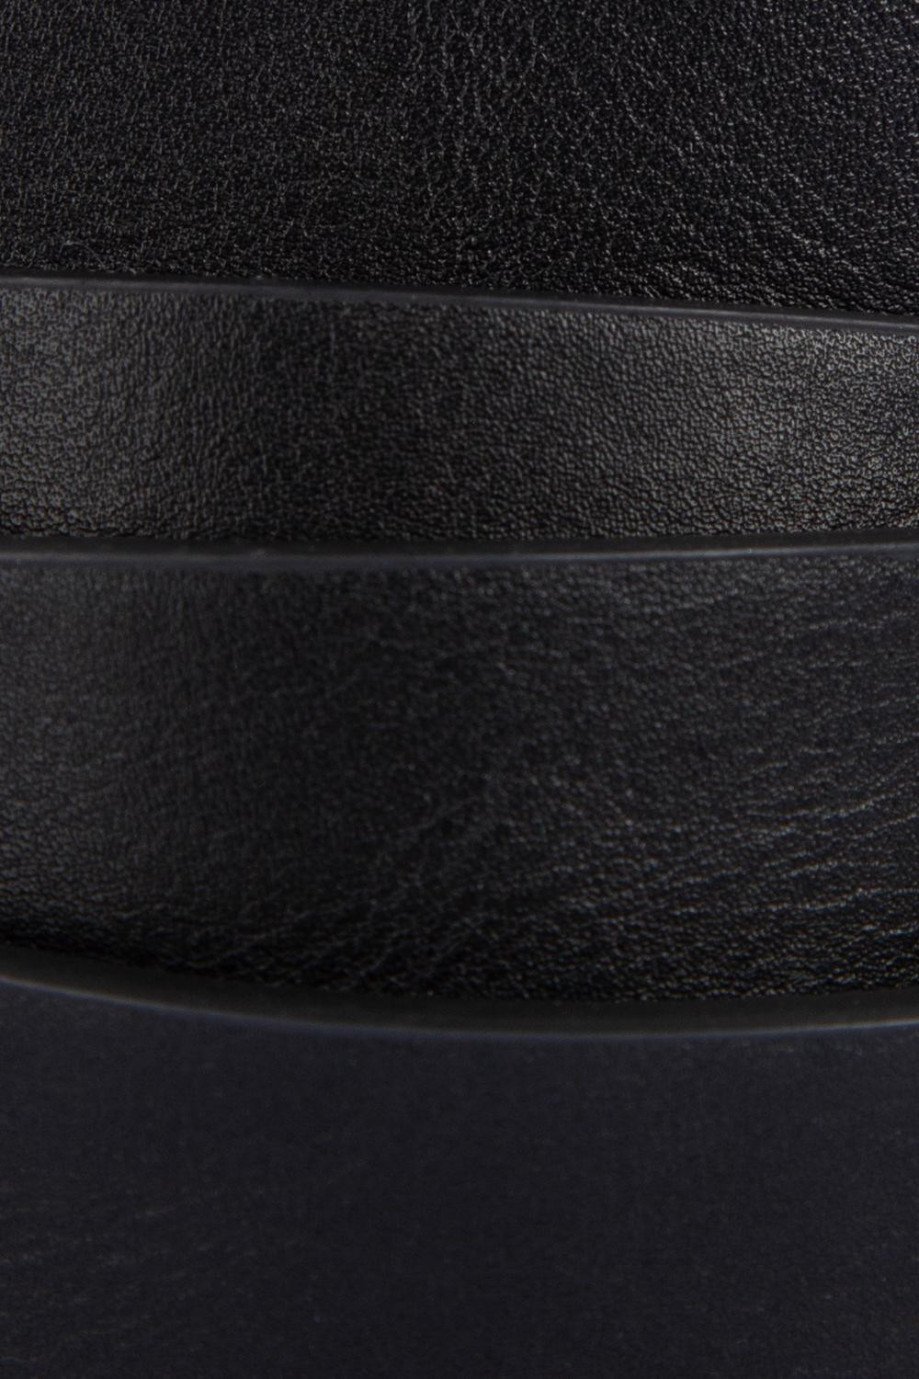 Cinturón negro de textura lisa con hebilla dorada redonda